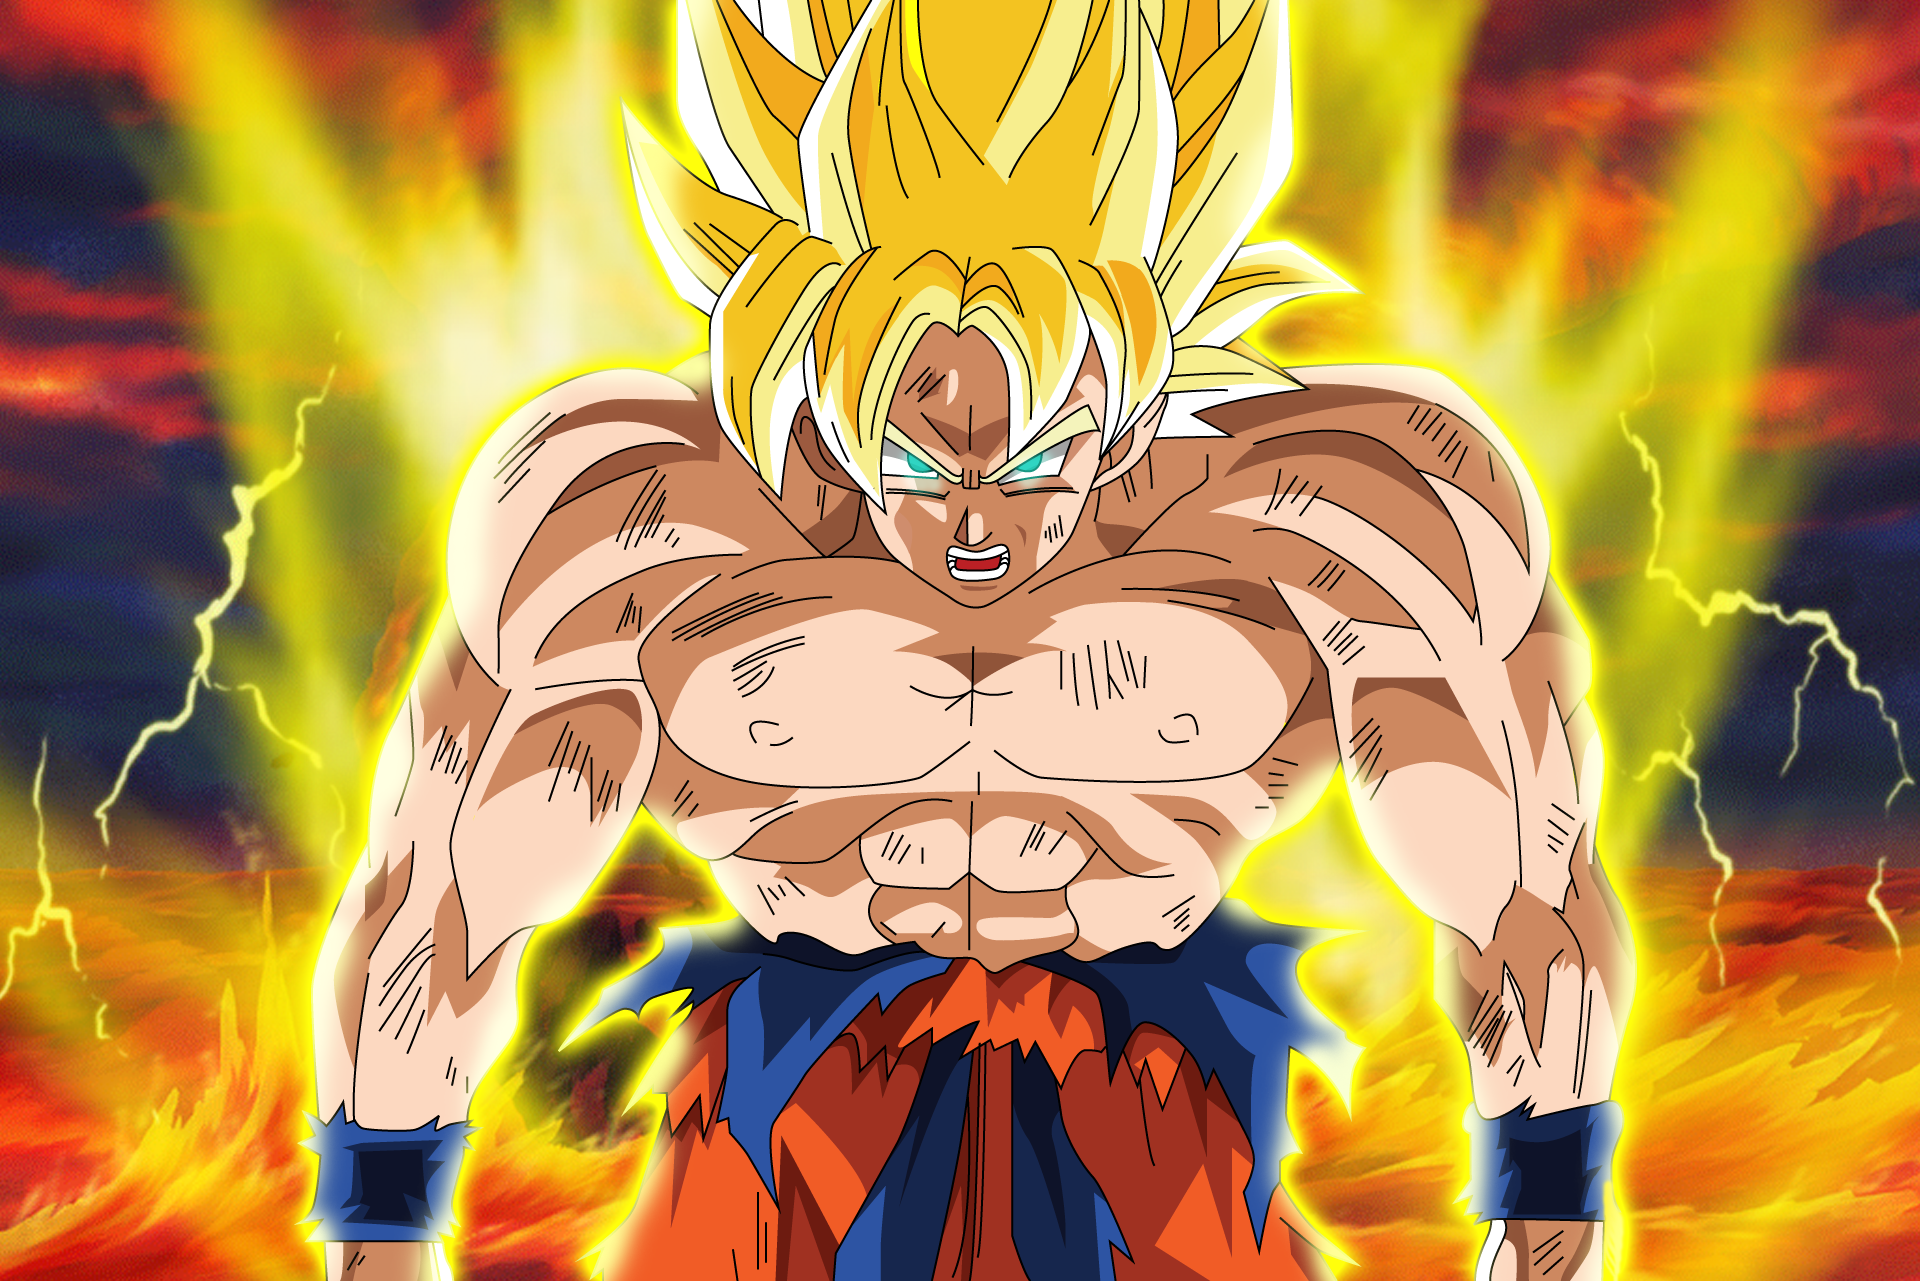 Dokkan Battle Goku Super Saiyan 4 by anthony123ytb on DeviantArt